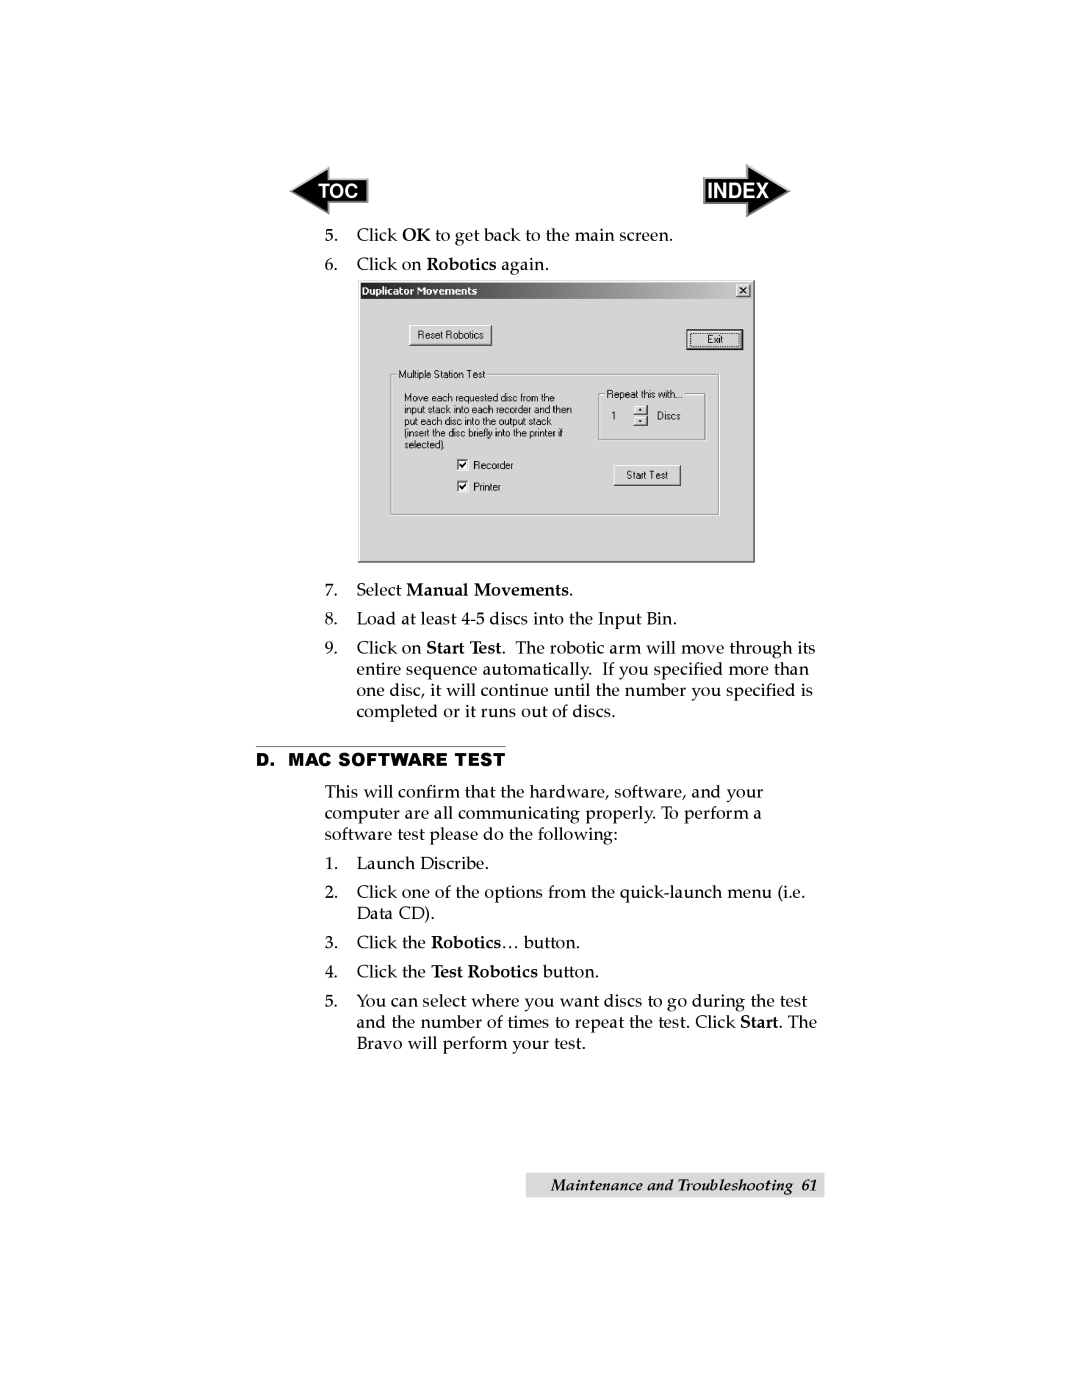 Primera Technology II user manual Index, Select Manual Movements, D.Mac Software Test 